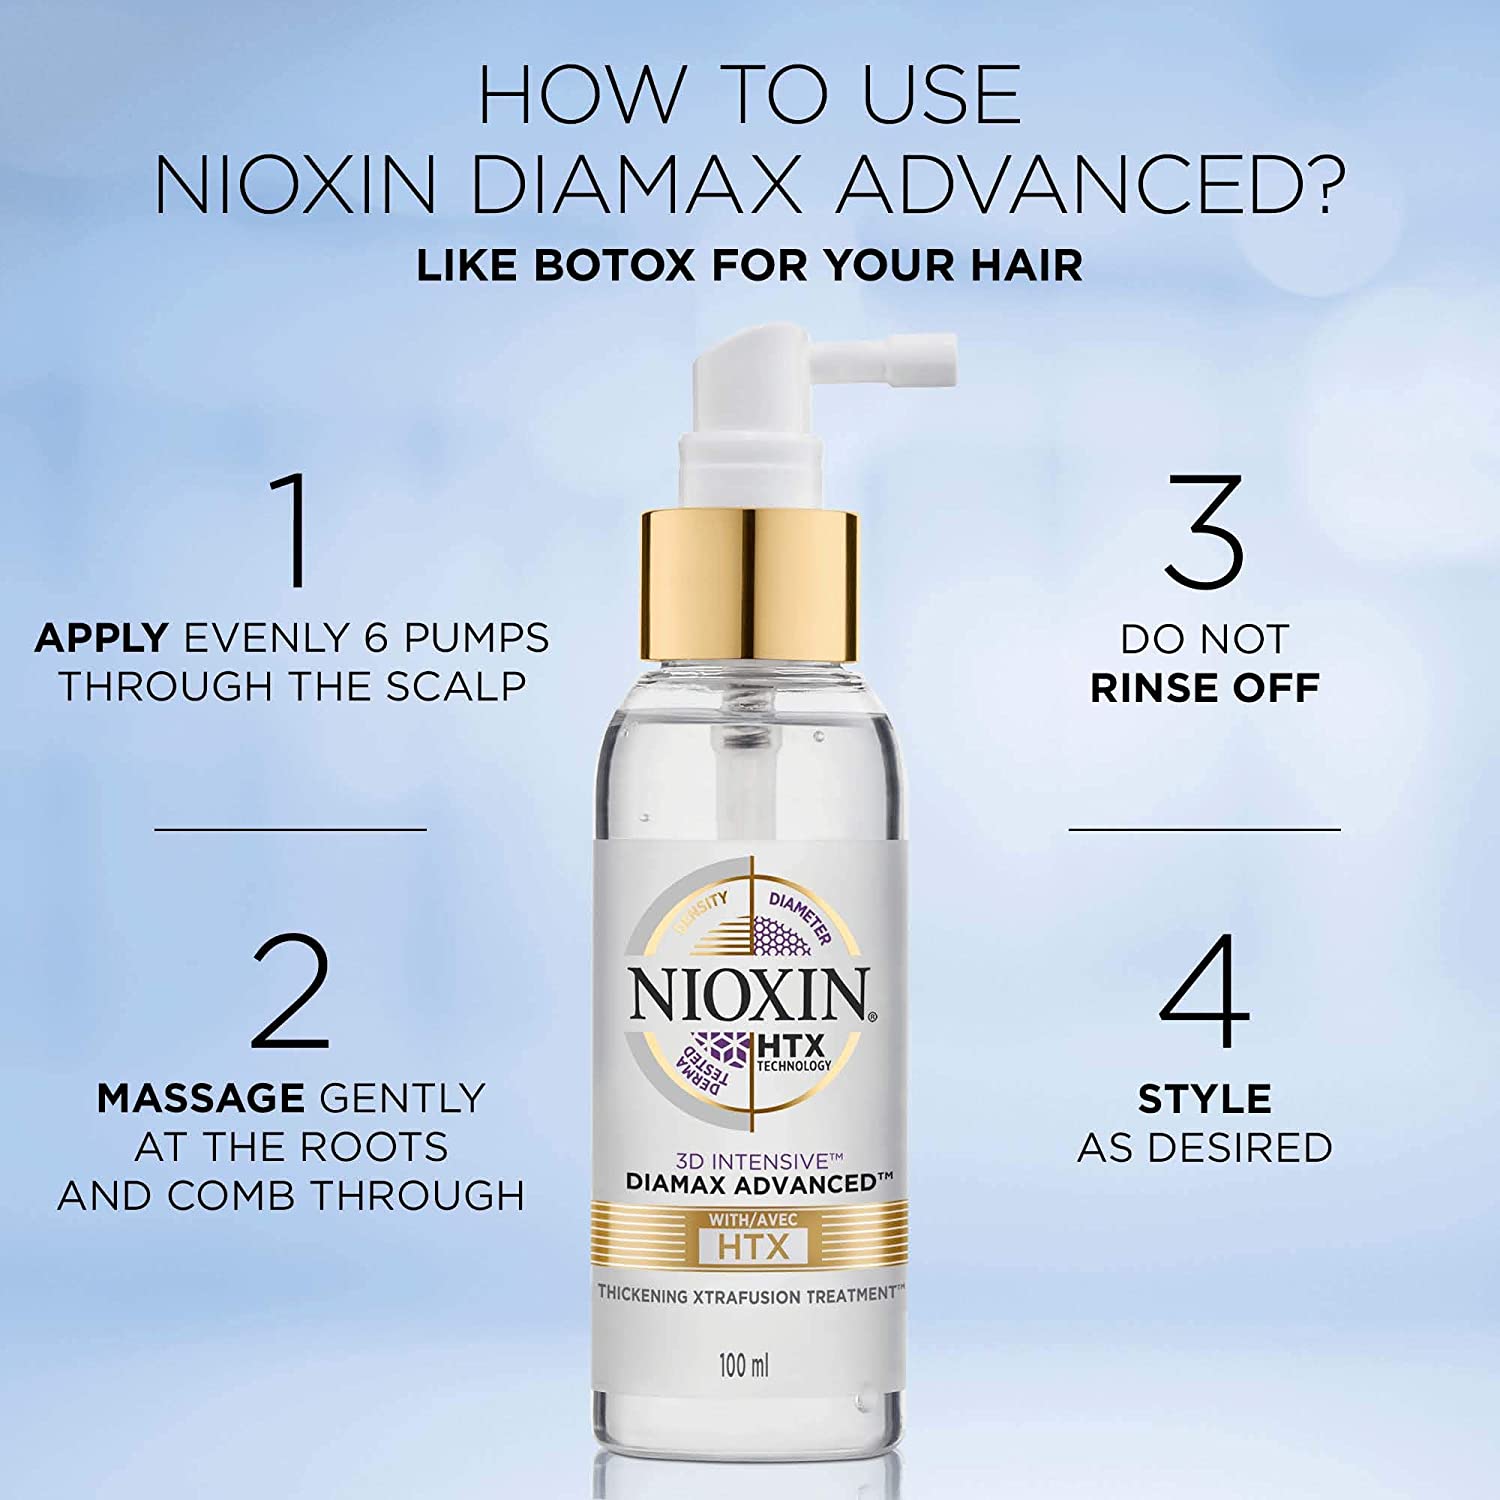 Nioxin Diamax Advanced How to Use